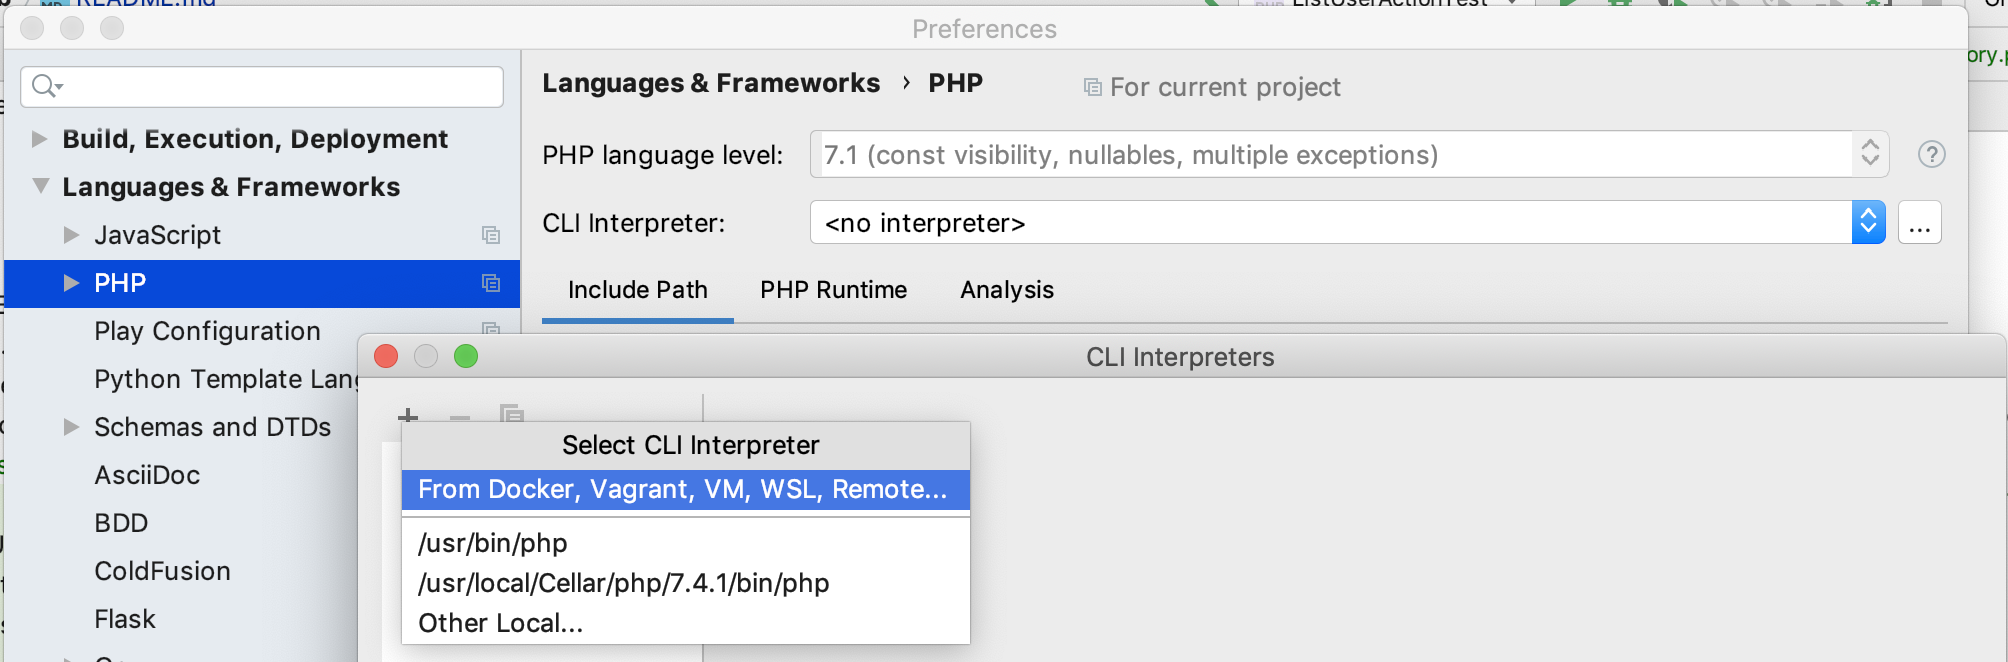 php-interpreter-preferences